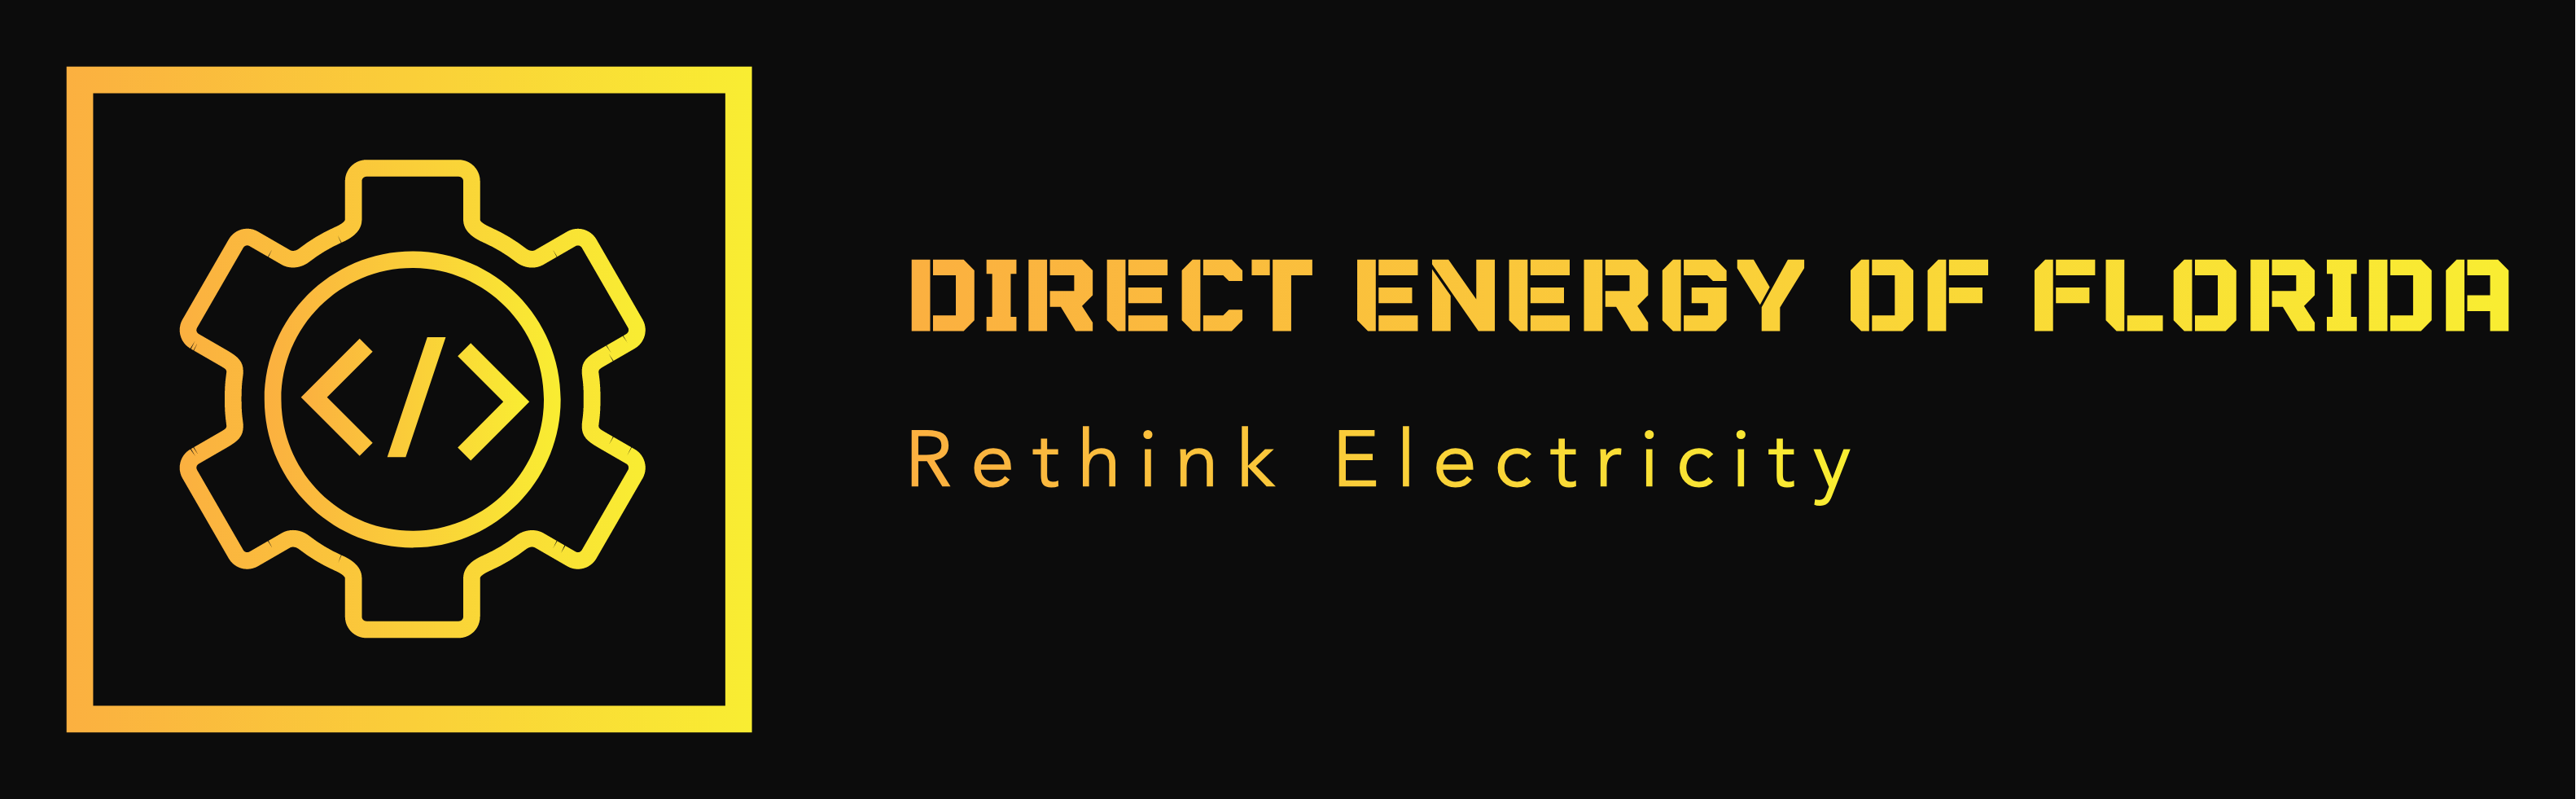 Direct Energy of Florida logo